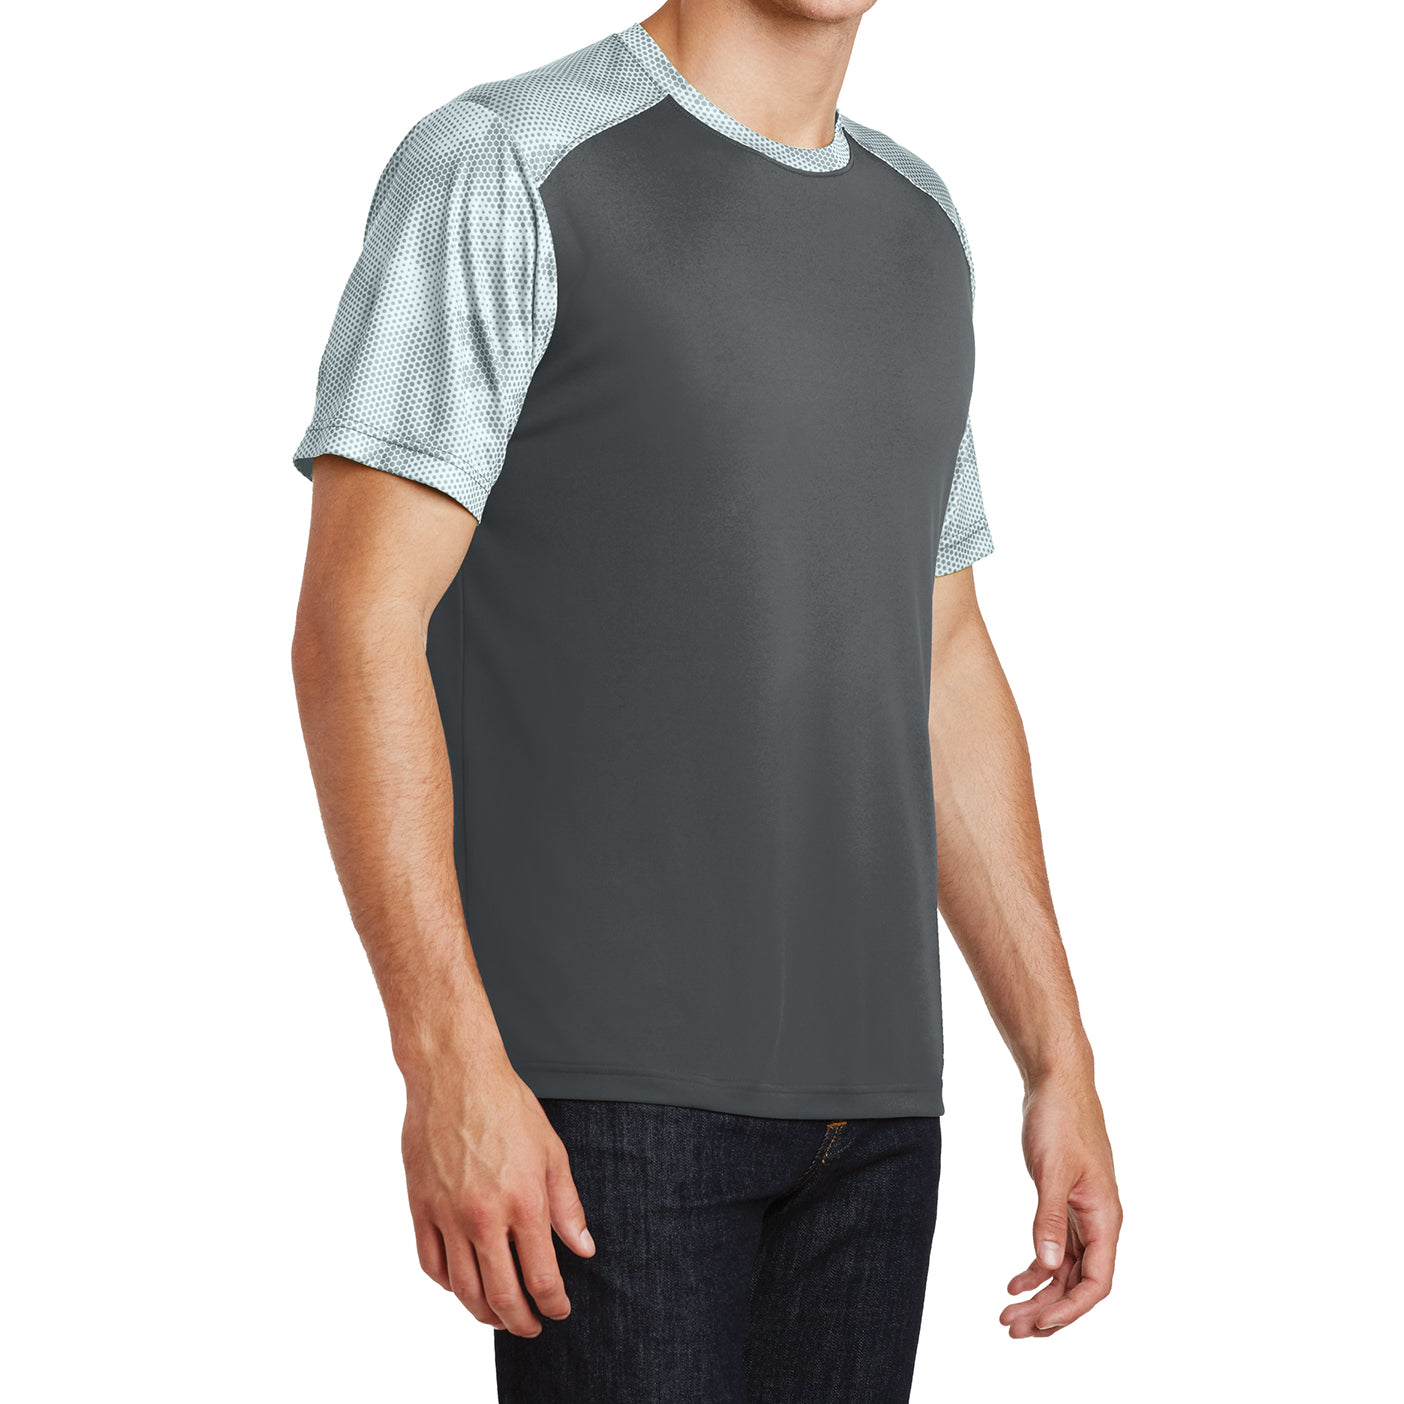 Men's CamoHex Colorblock Tee Shirt Iron Grey/ White Side